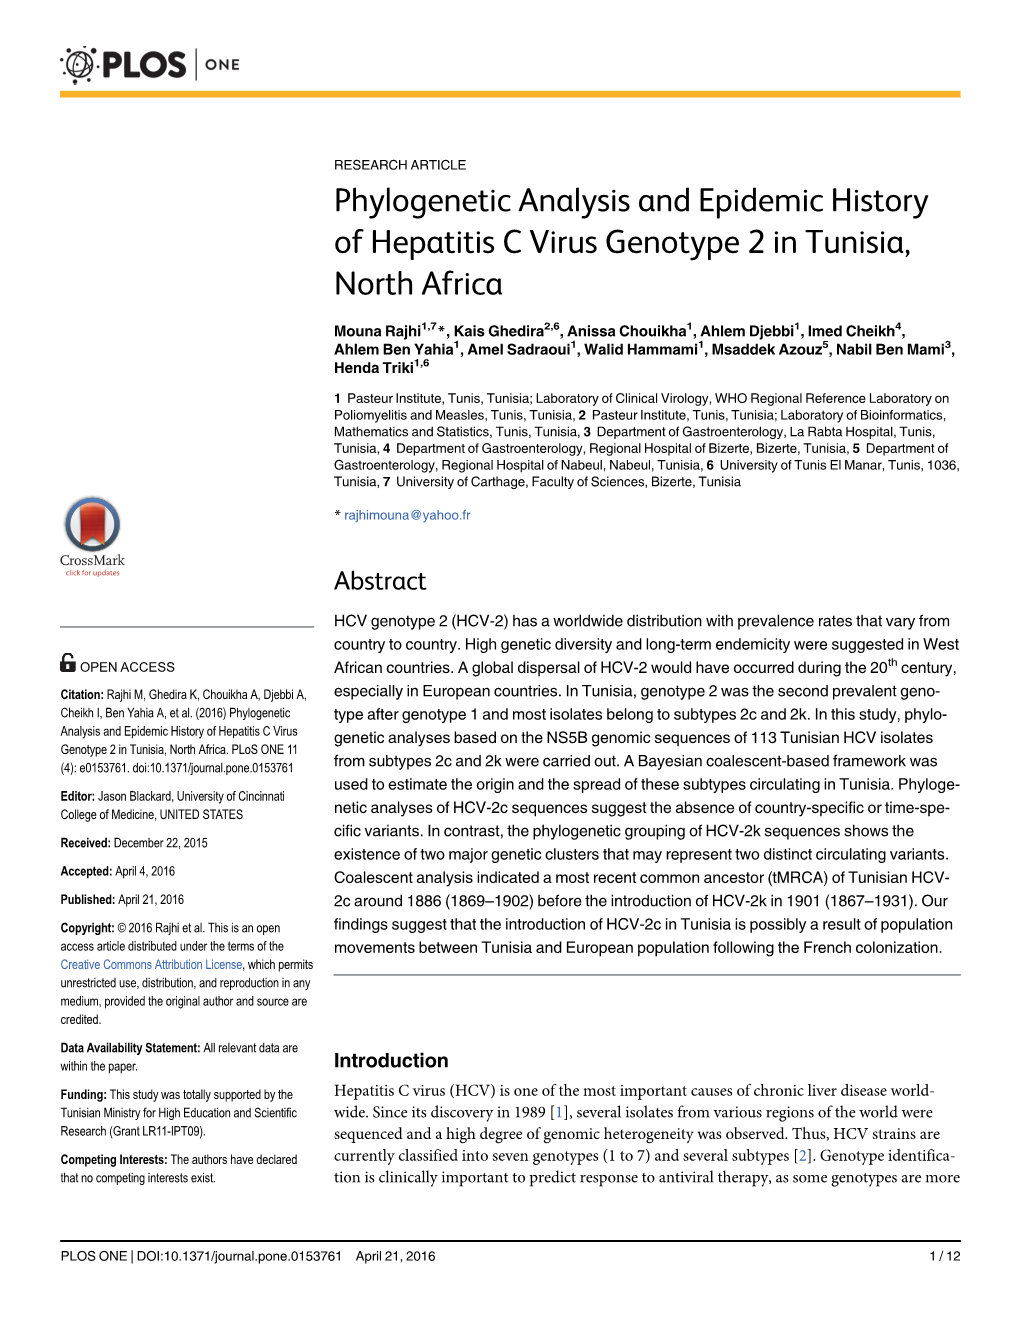 Phylogenetic Analysis and Epidemic History of Hepatitis C Virus Genotype 2 in Tunisia, North Africa